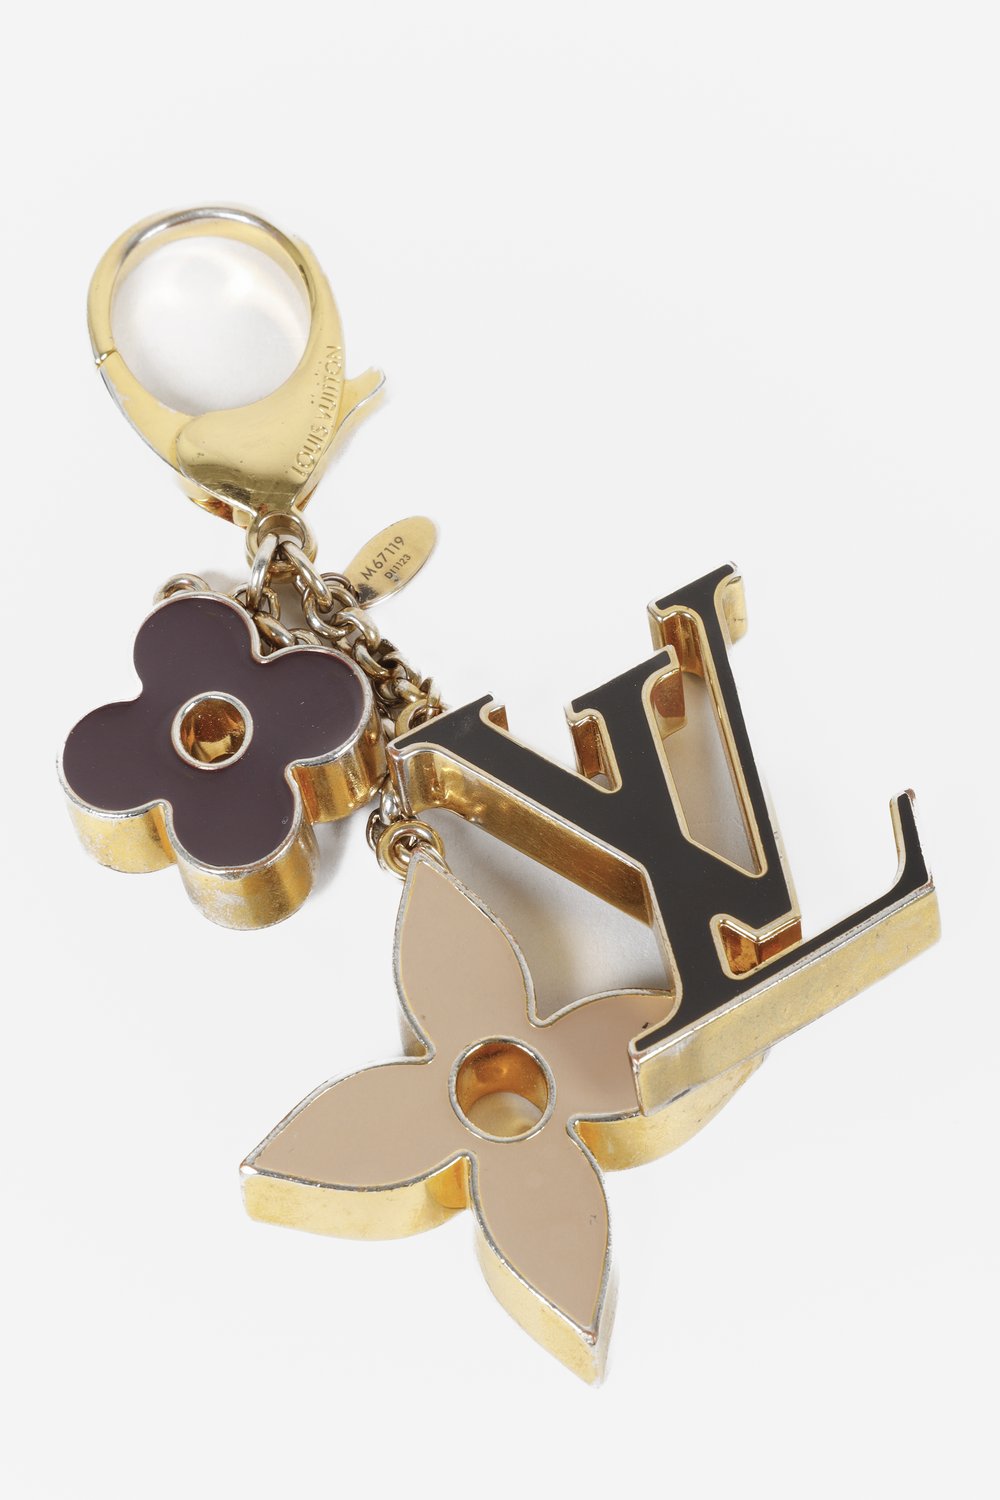 Louis Vuitton Necklace Sweet Heart Monogram Gold LV Logo Flower accessories